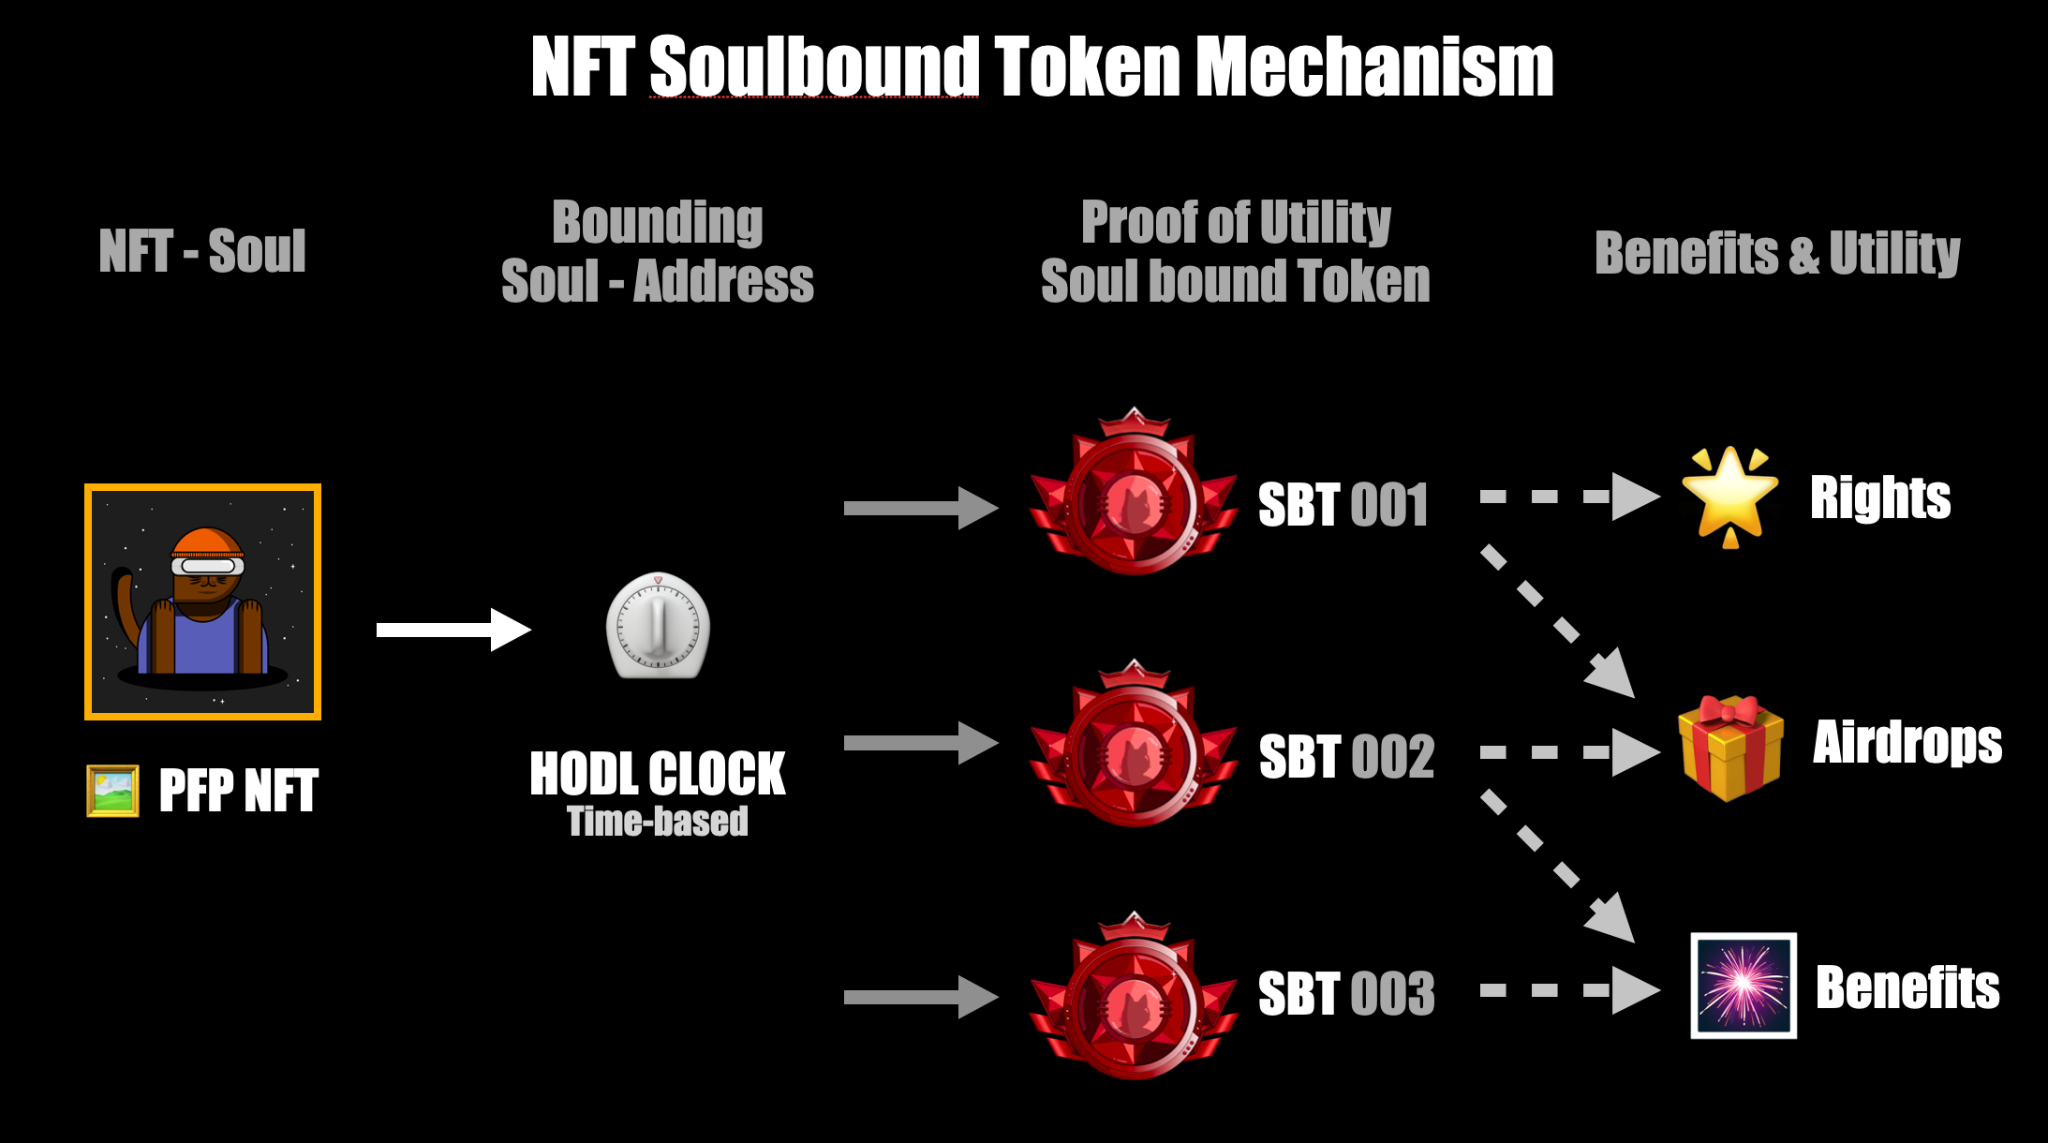 Proof of Utility賦能證明：通過SBT技術框架量化NFT權益的解決方案